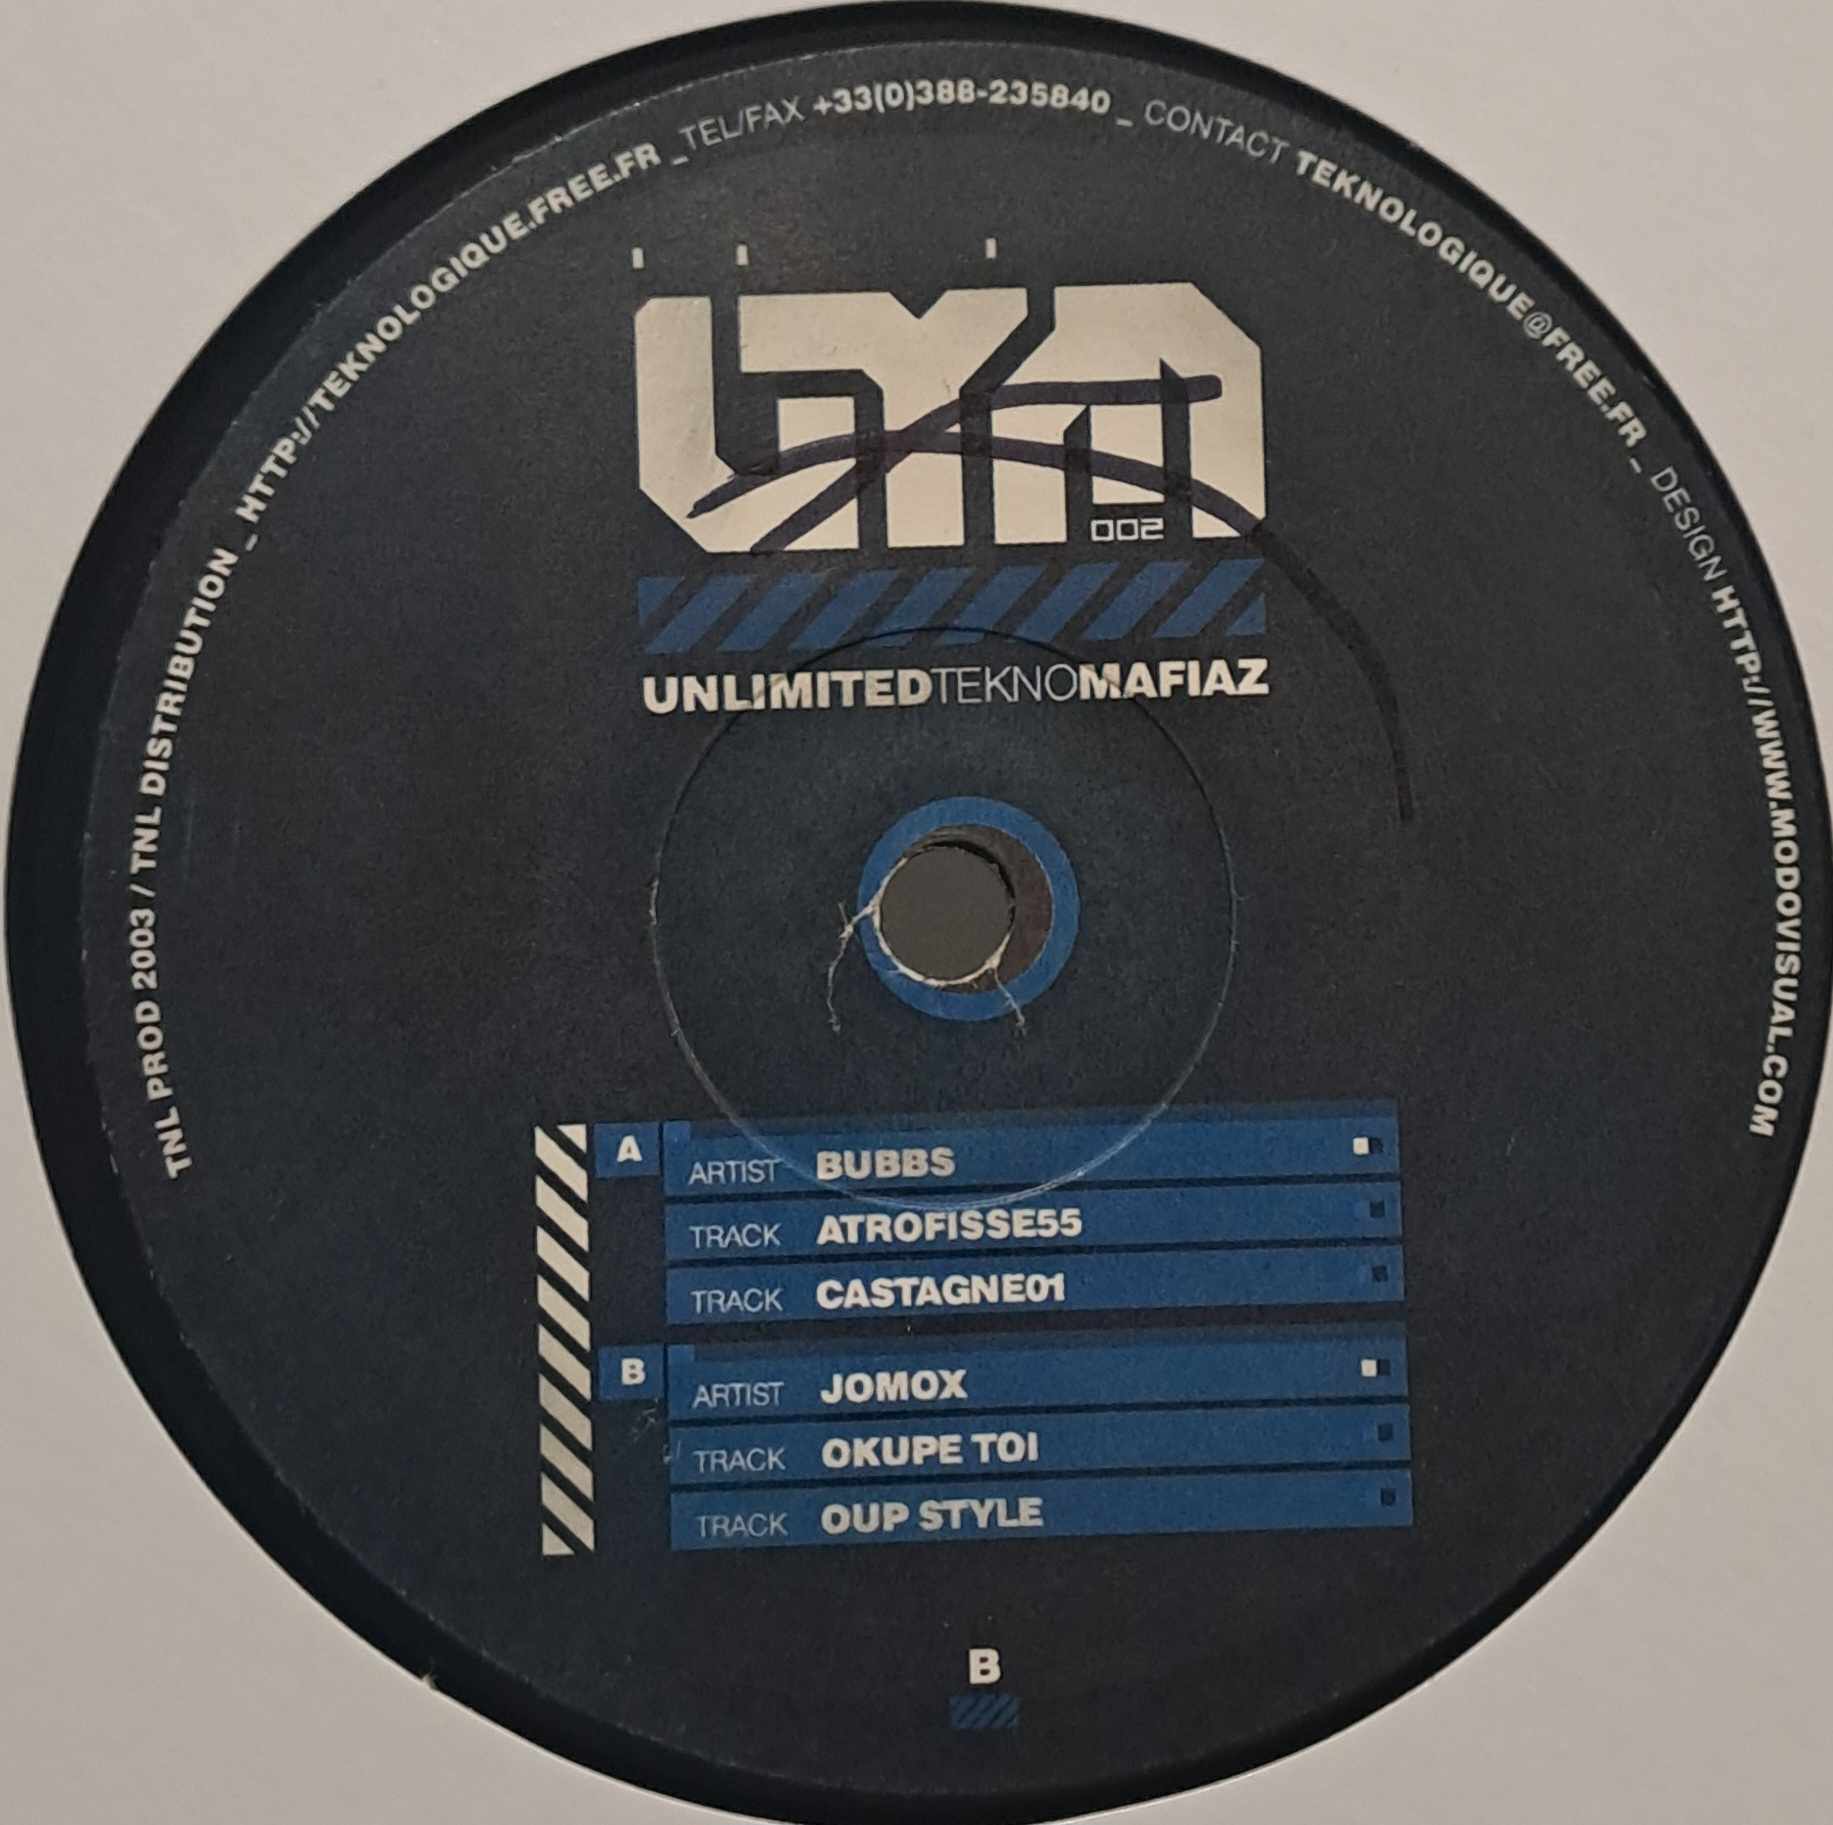 Unlimited Tekno Mafiaz 002 - vinyle freetekno